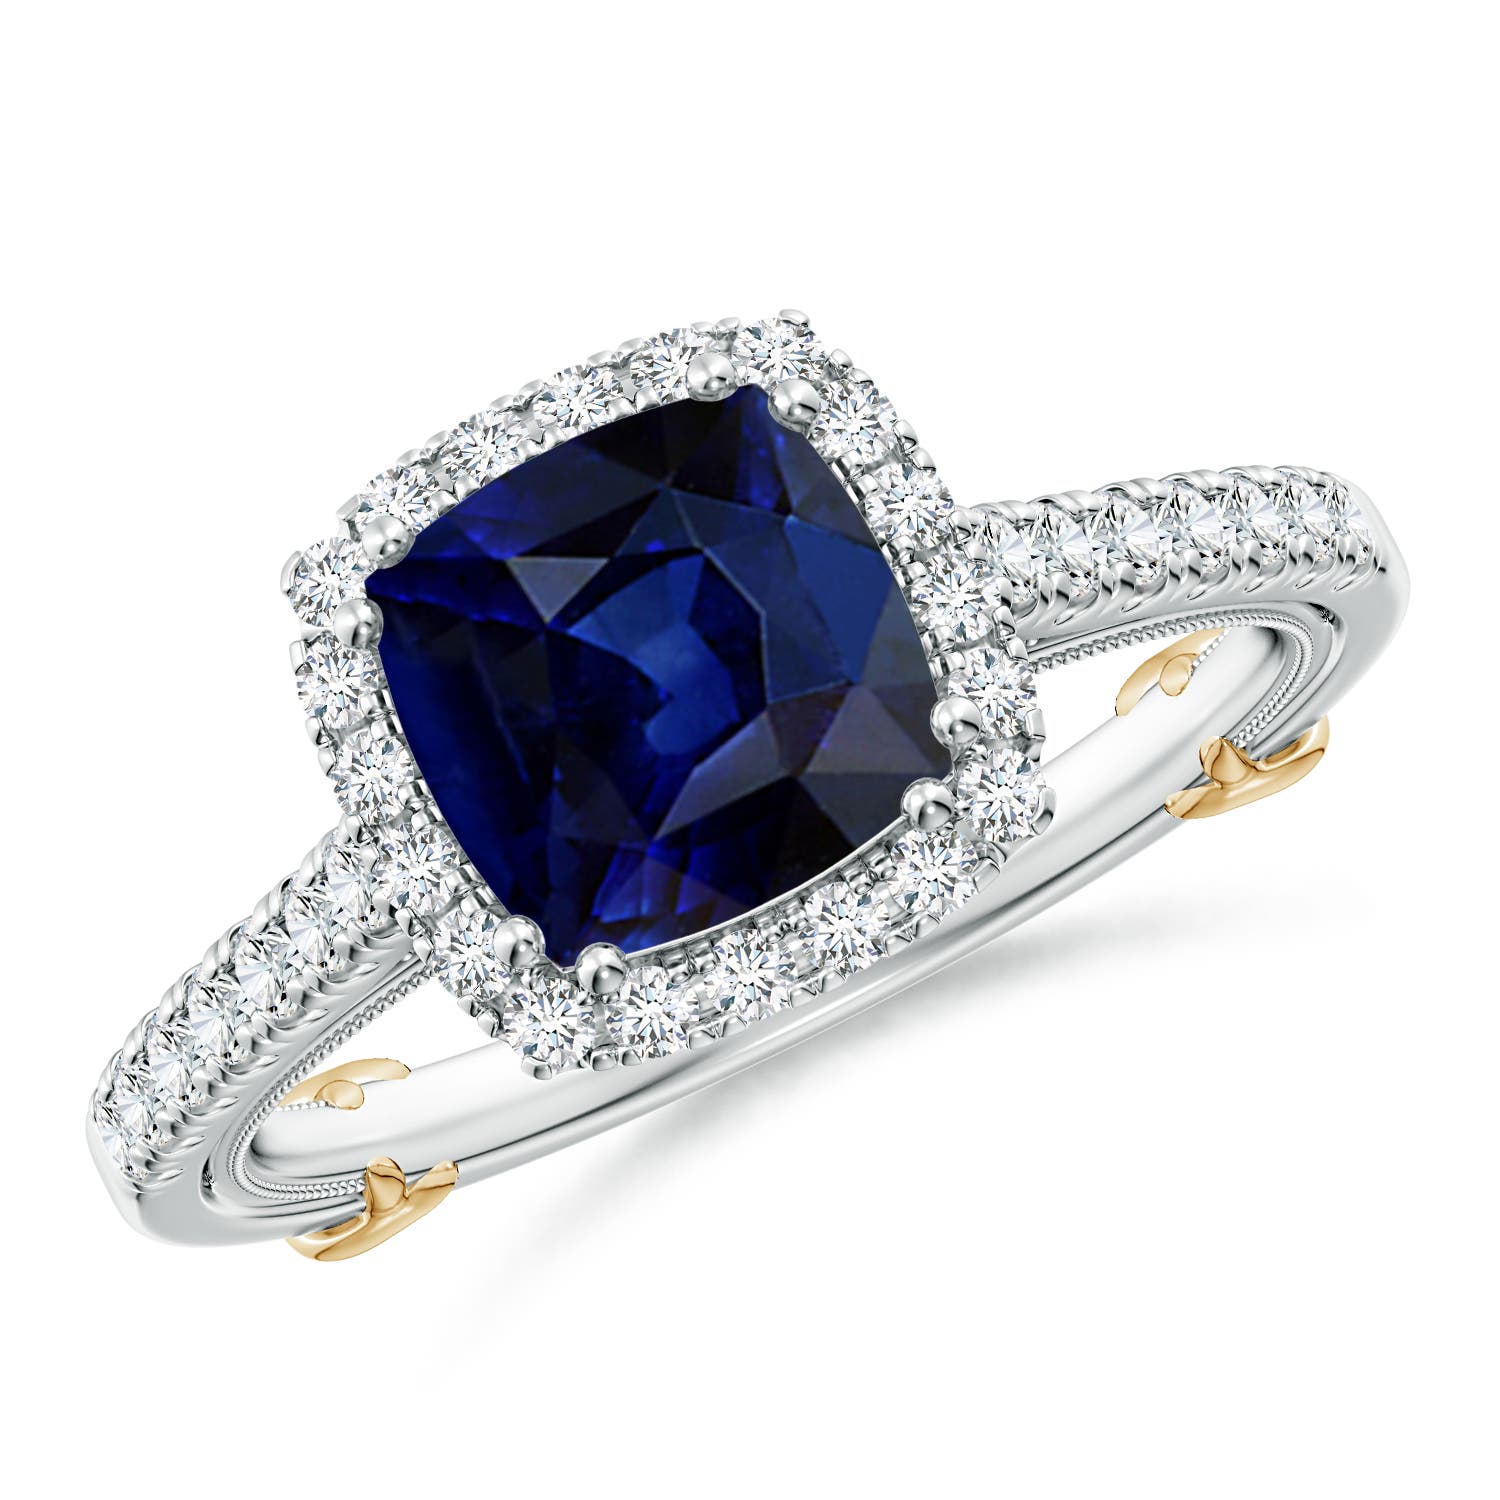 Vintage Inspired Sapphire & Diamond Halo Ring with Filigree | Angara